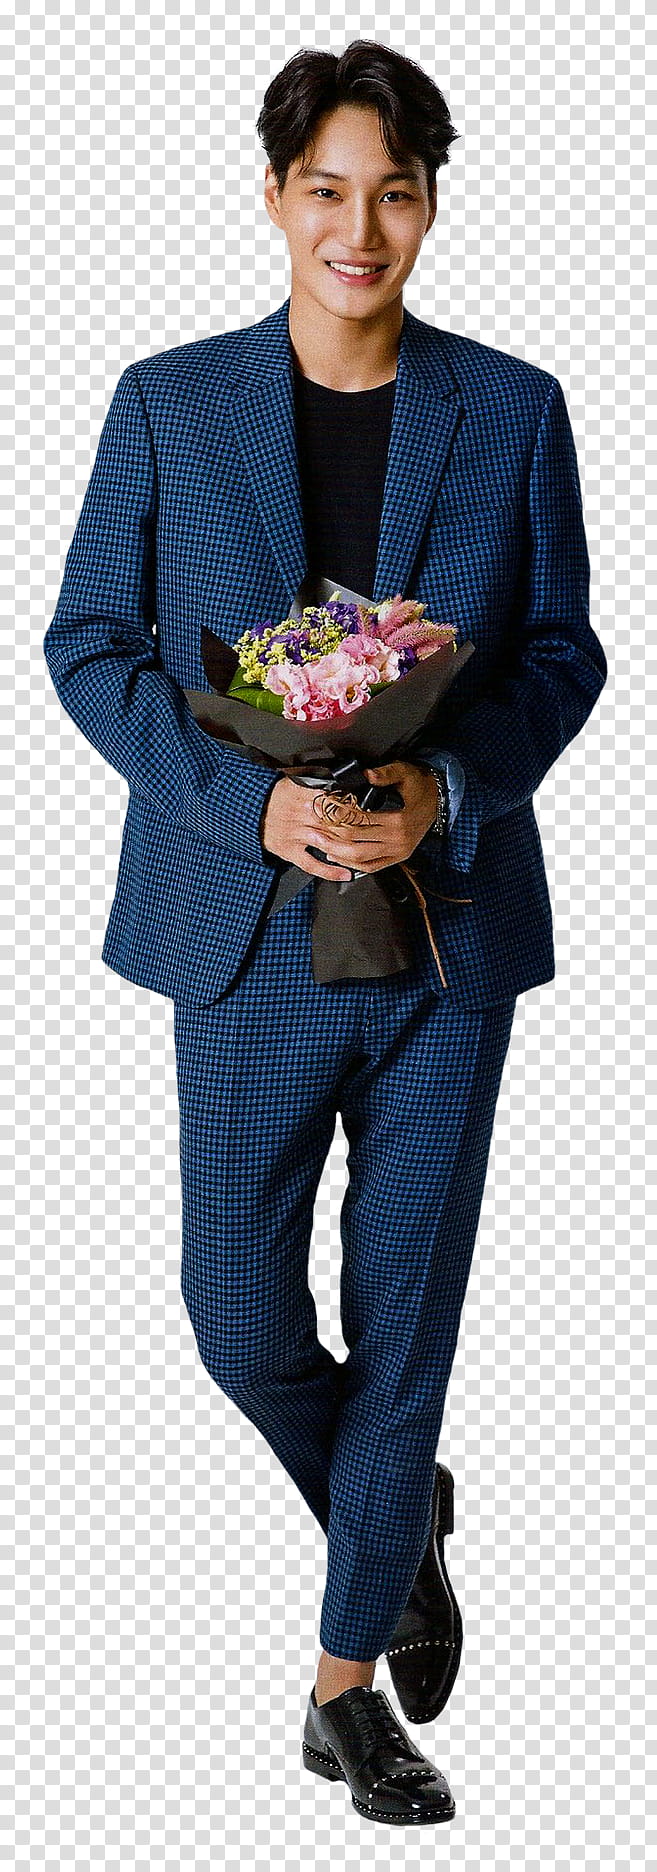 EXO Kai haru hana, man holding bouquet of flowers transparent background PNG clipart